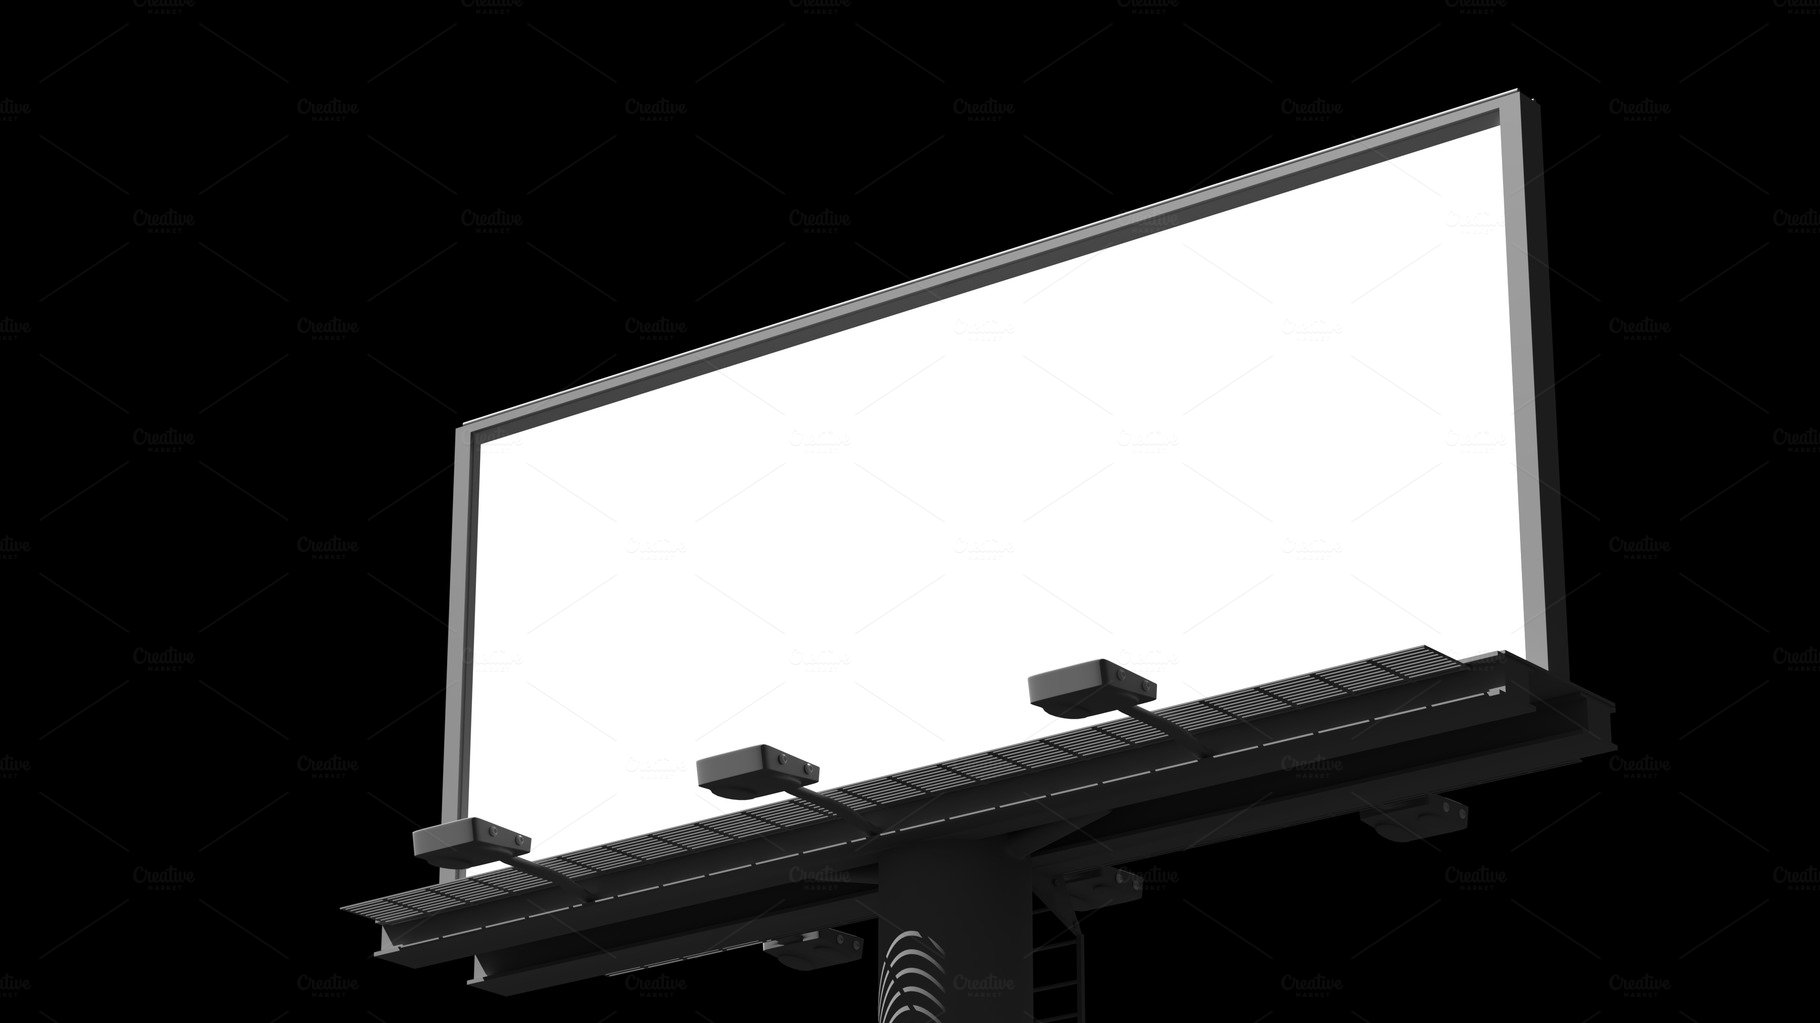 Blank billboard on black background cover image.